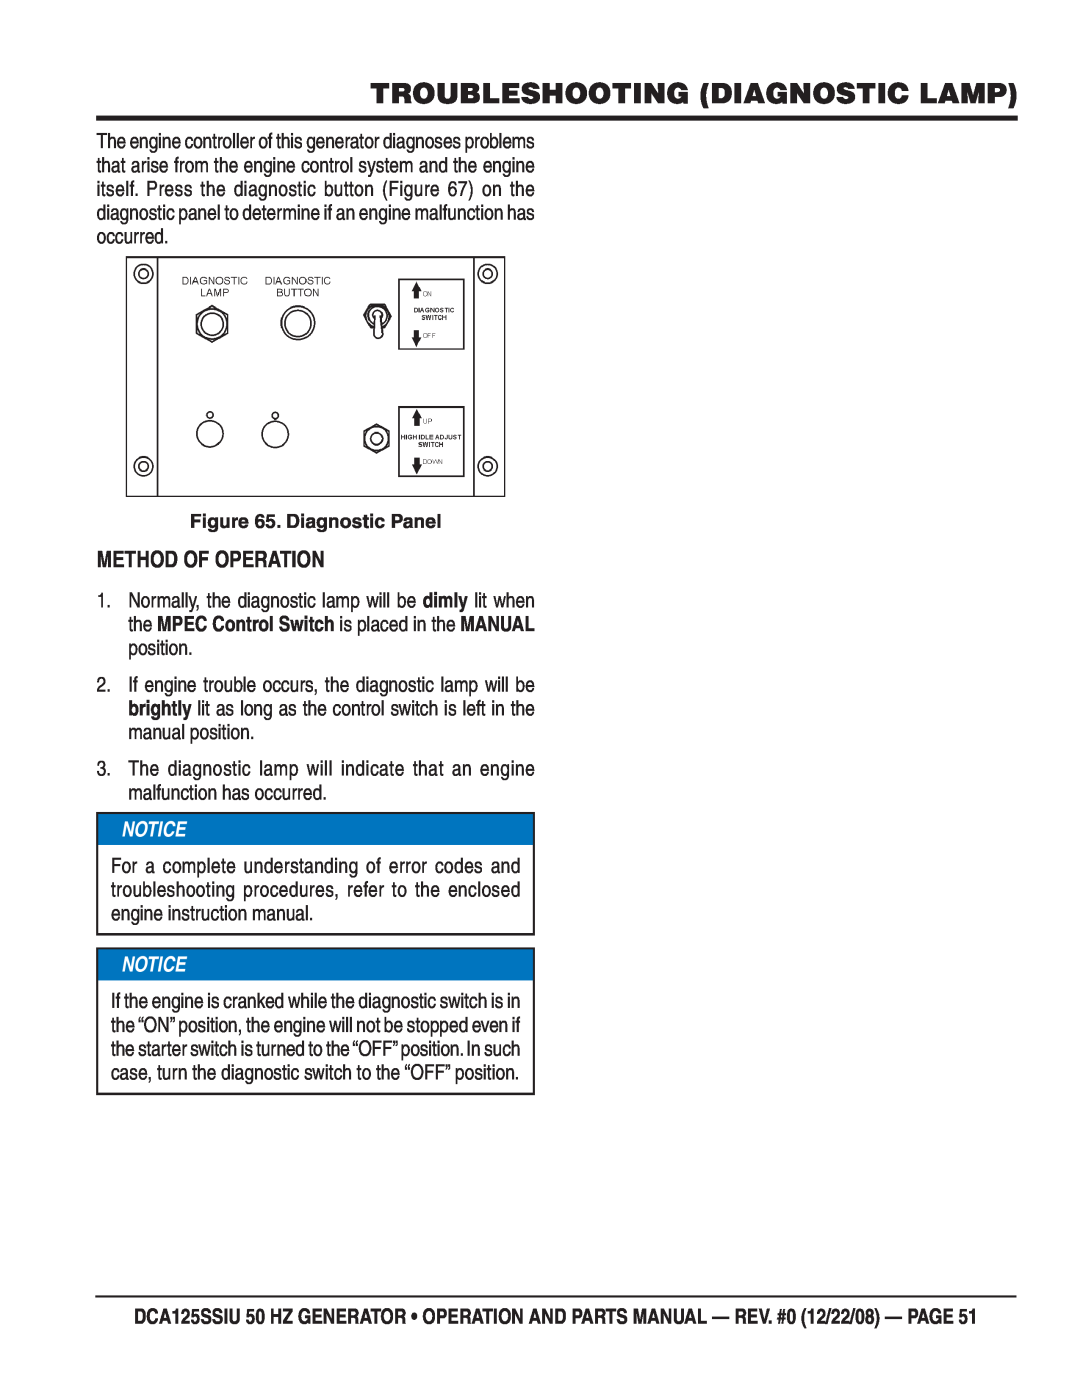 Multiquip DCA125SSIU manual Troubleshooting Diagnostic Lamp, Method Of Operation, Notice 